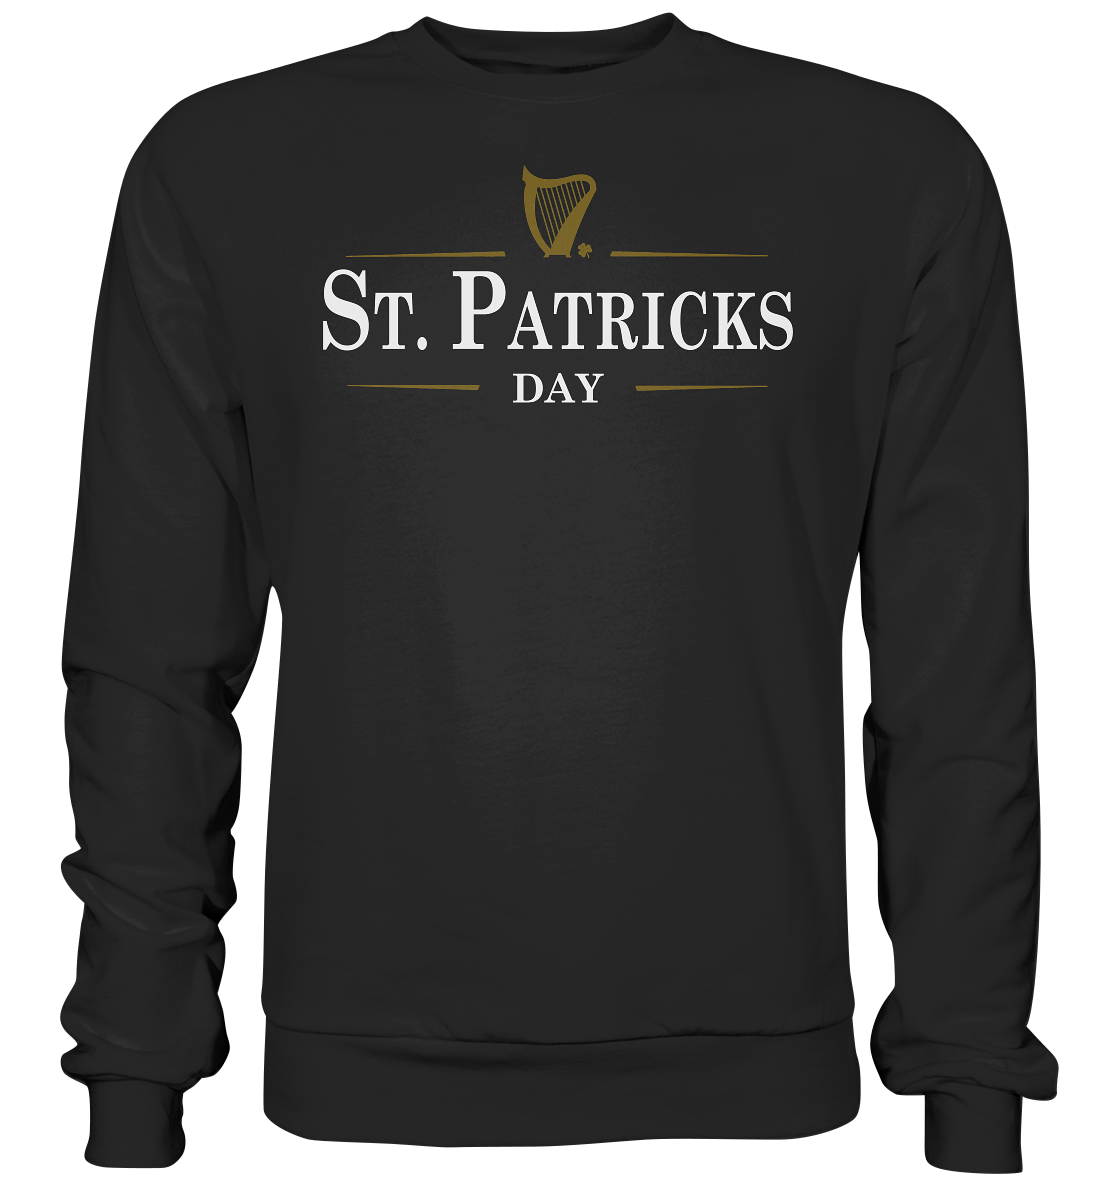 St. Patricks Day "Stout" - Basic Sweatshirt